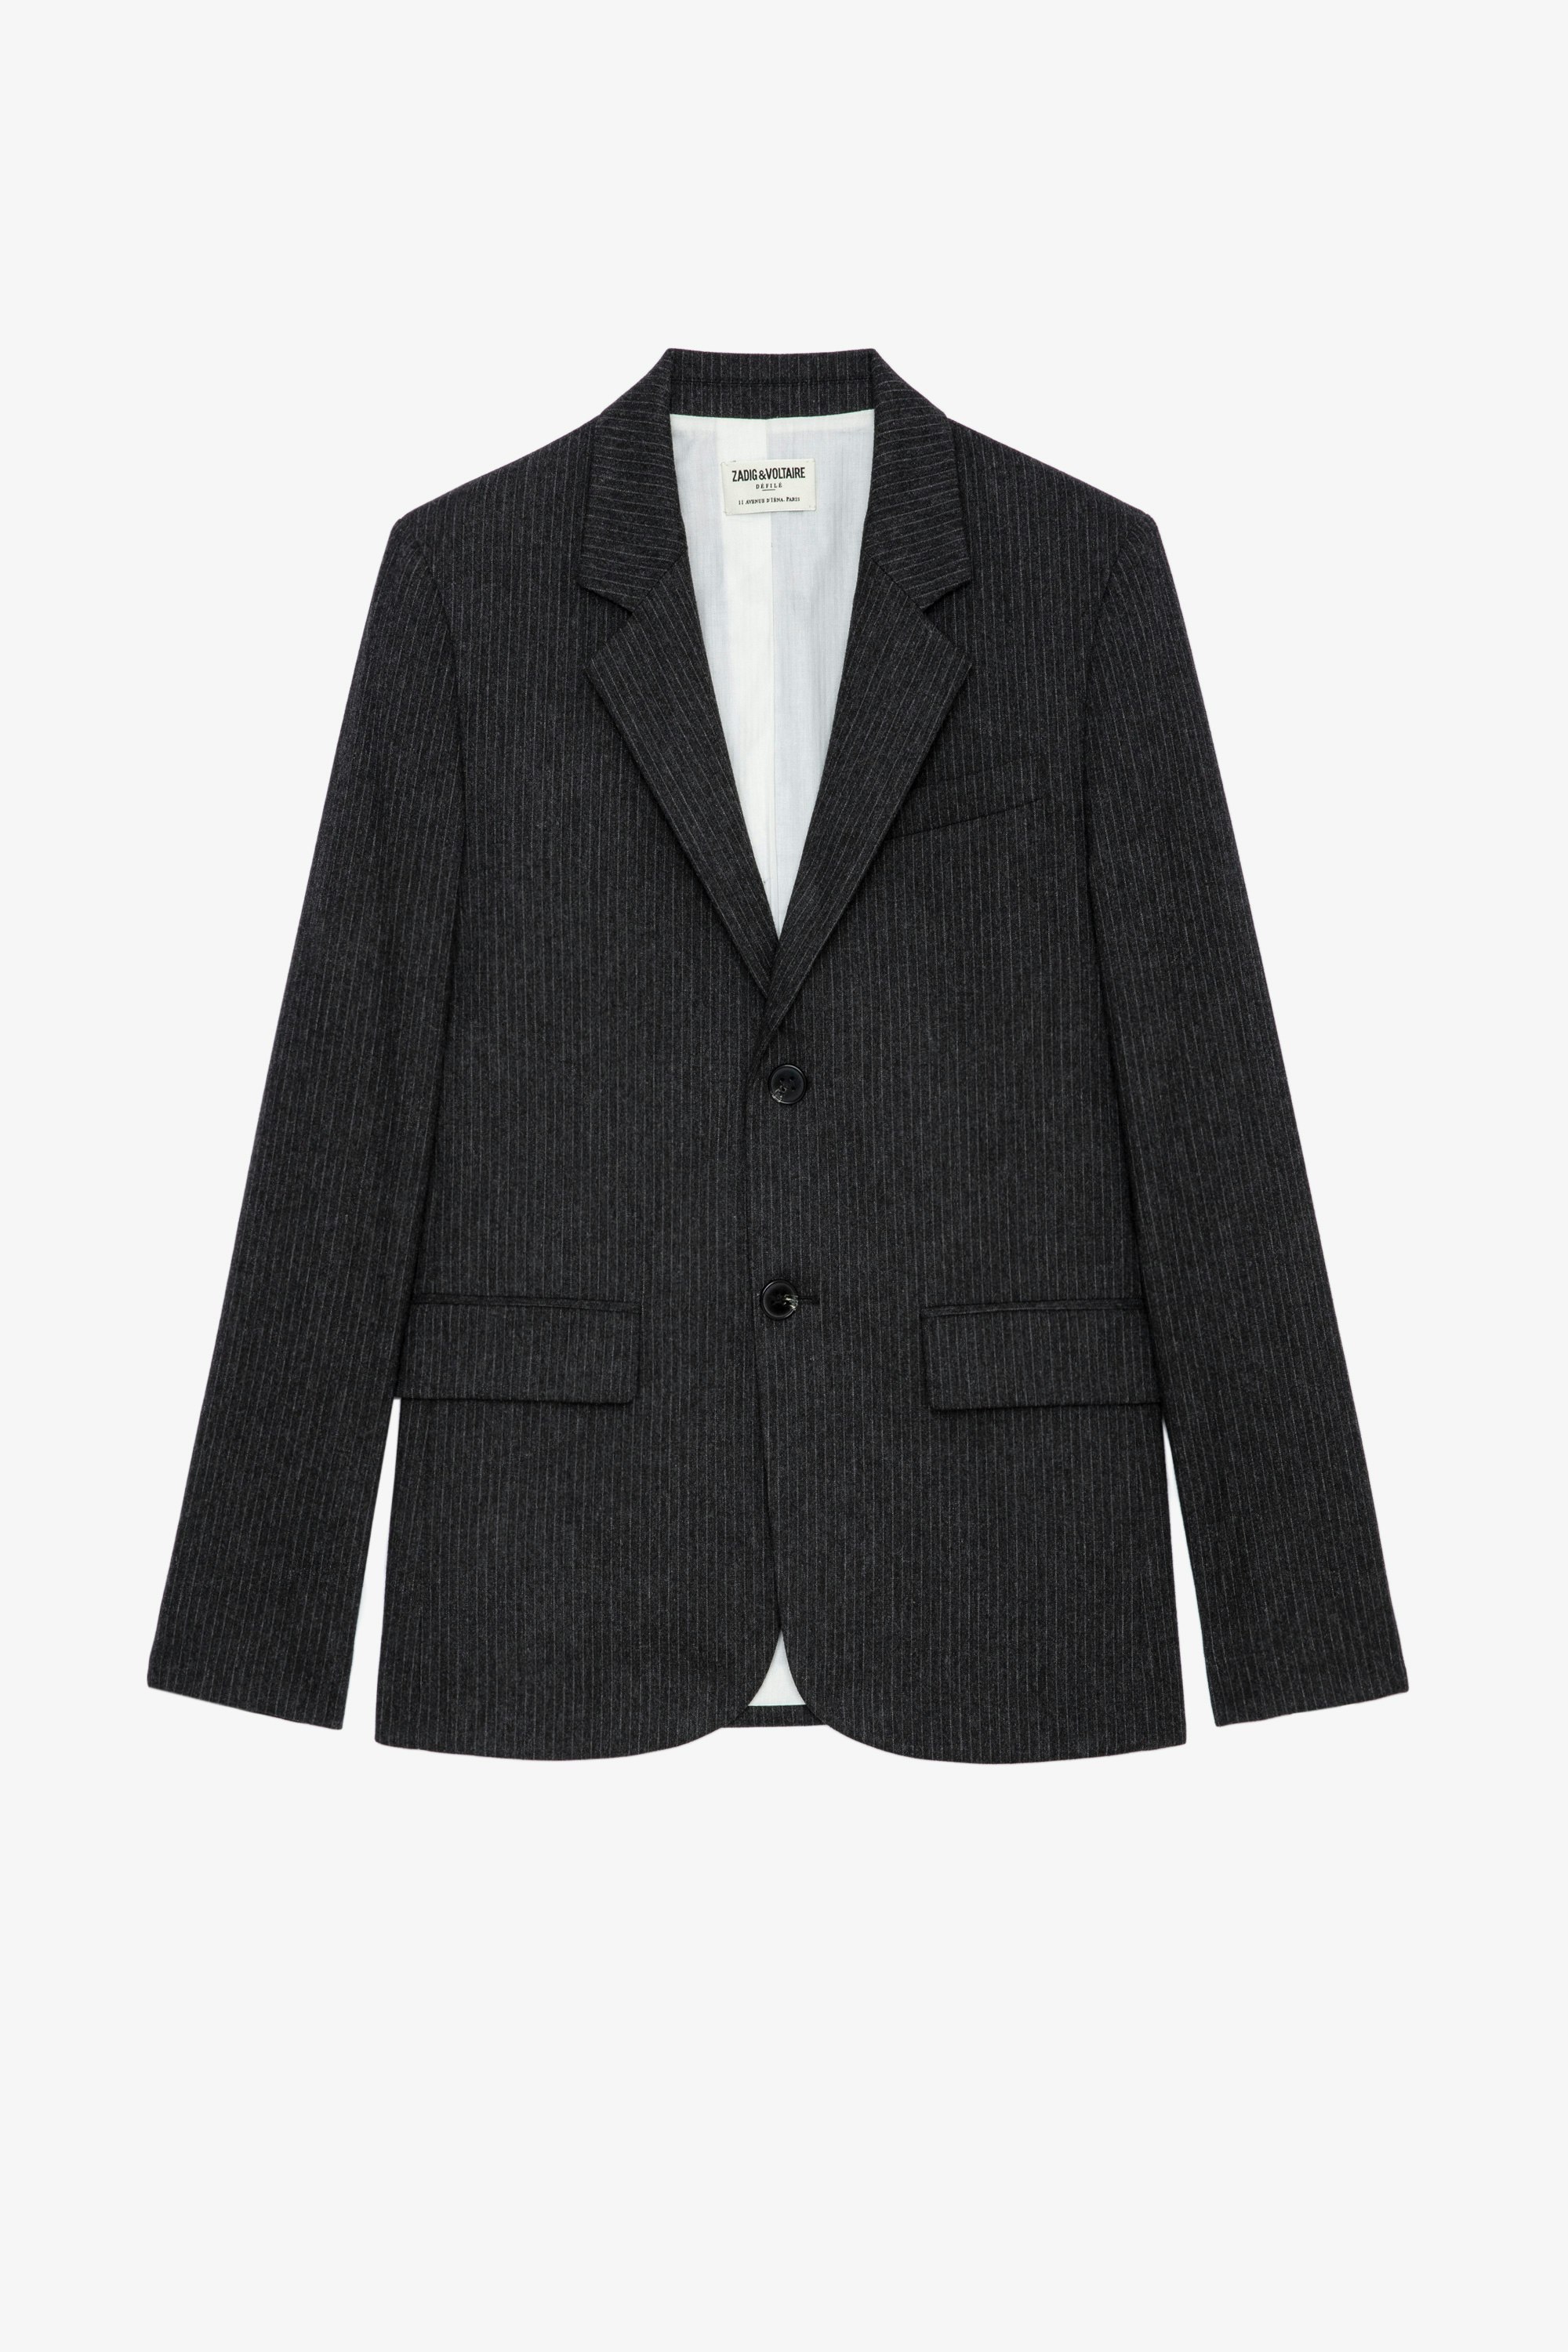 Vanille Jacket Women’s charcoal grey striped suit jacket